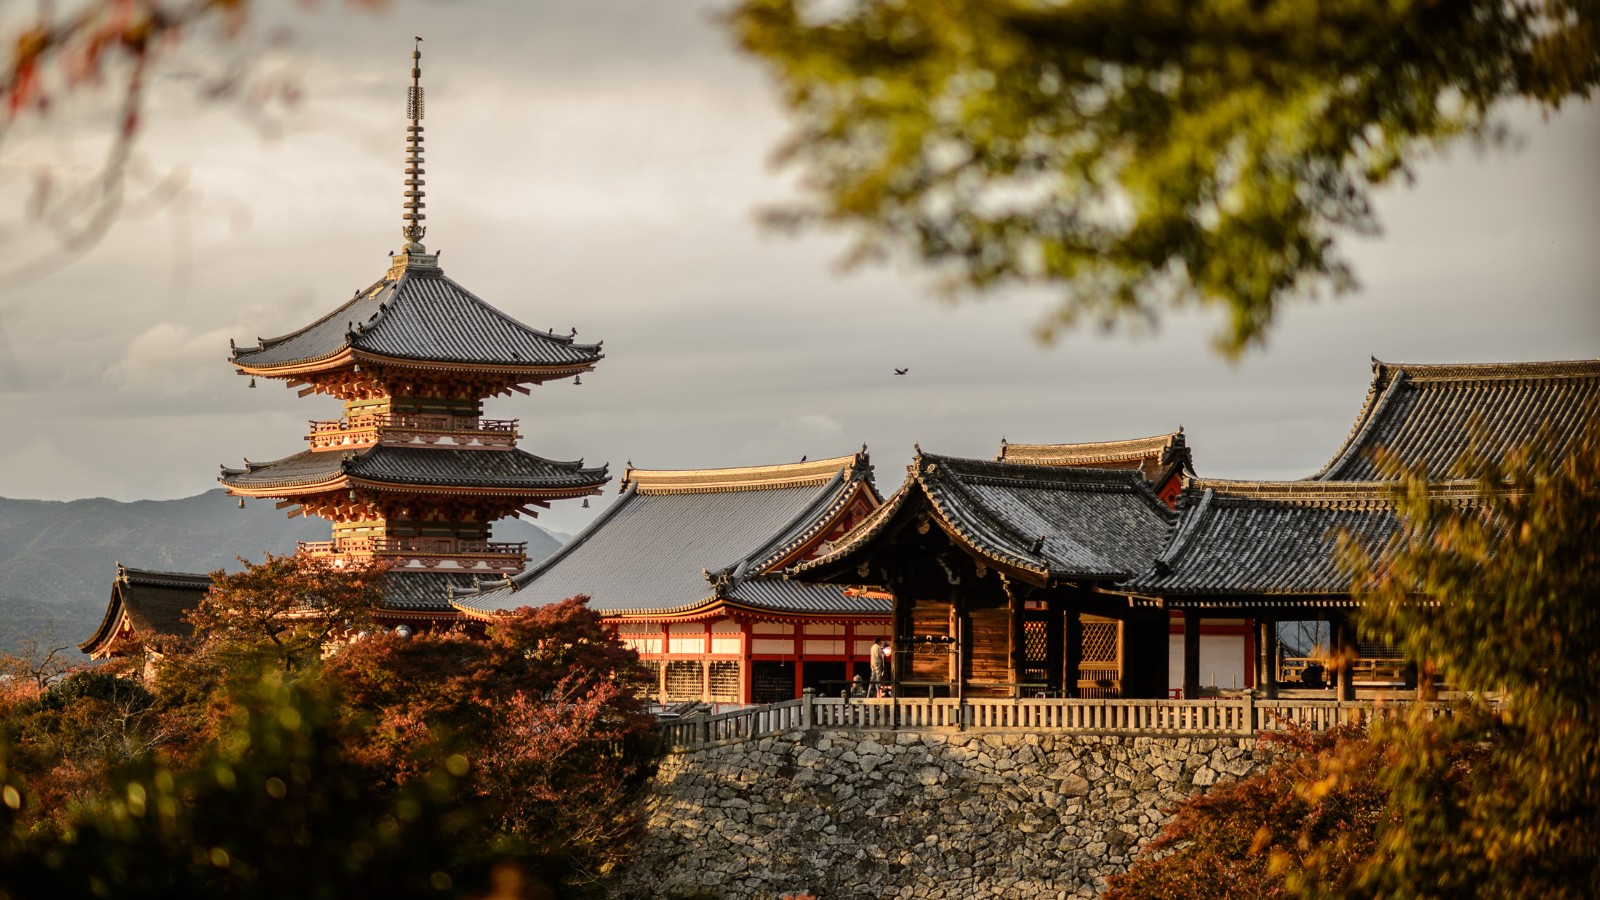 Kiyomizu-dera , HD Wallpaper & Backgrounds